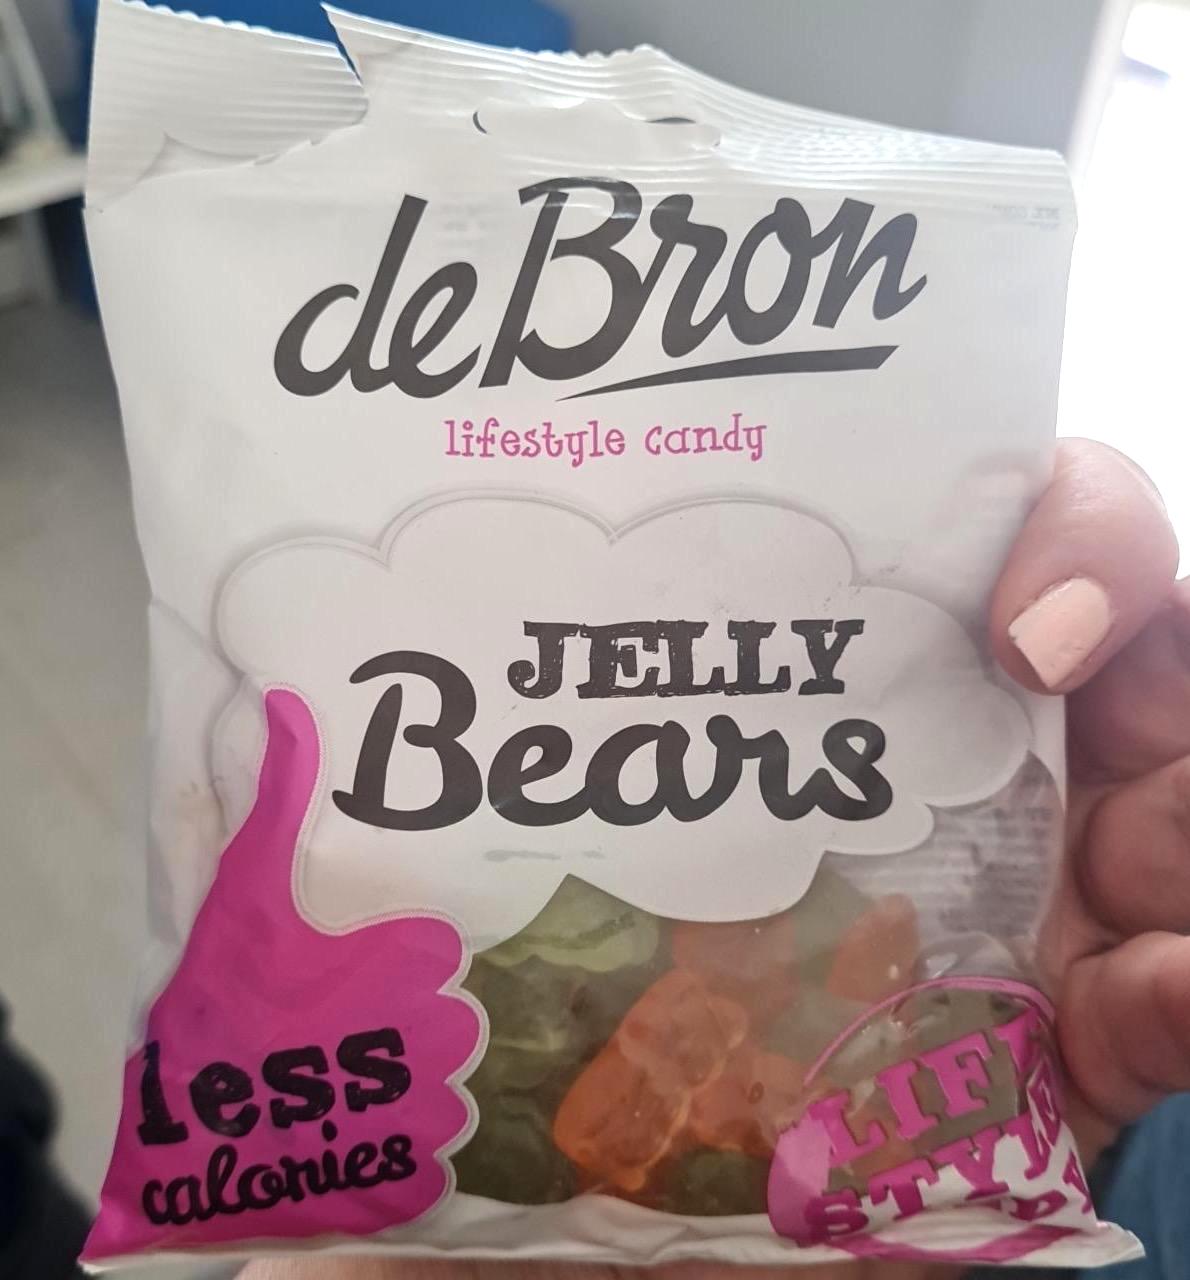 Képek - Jelly bears deBron